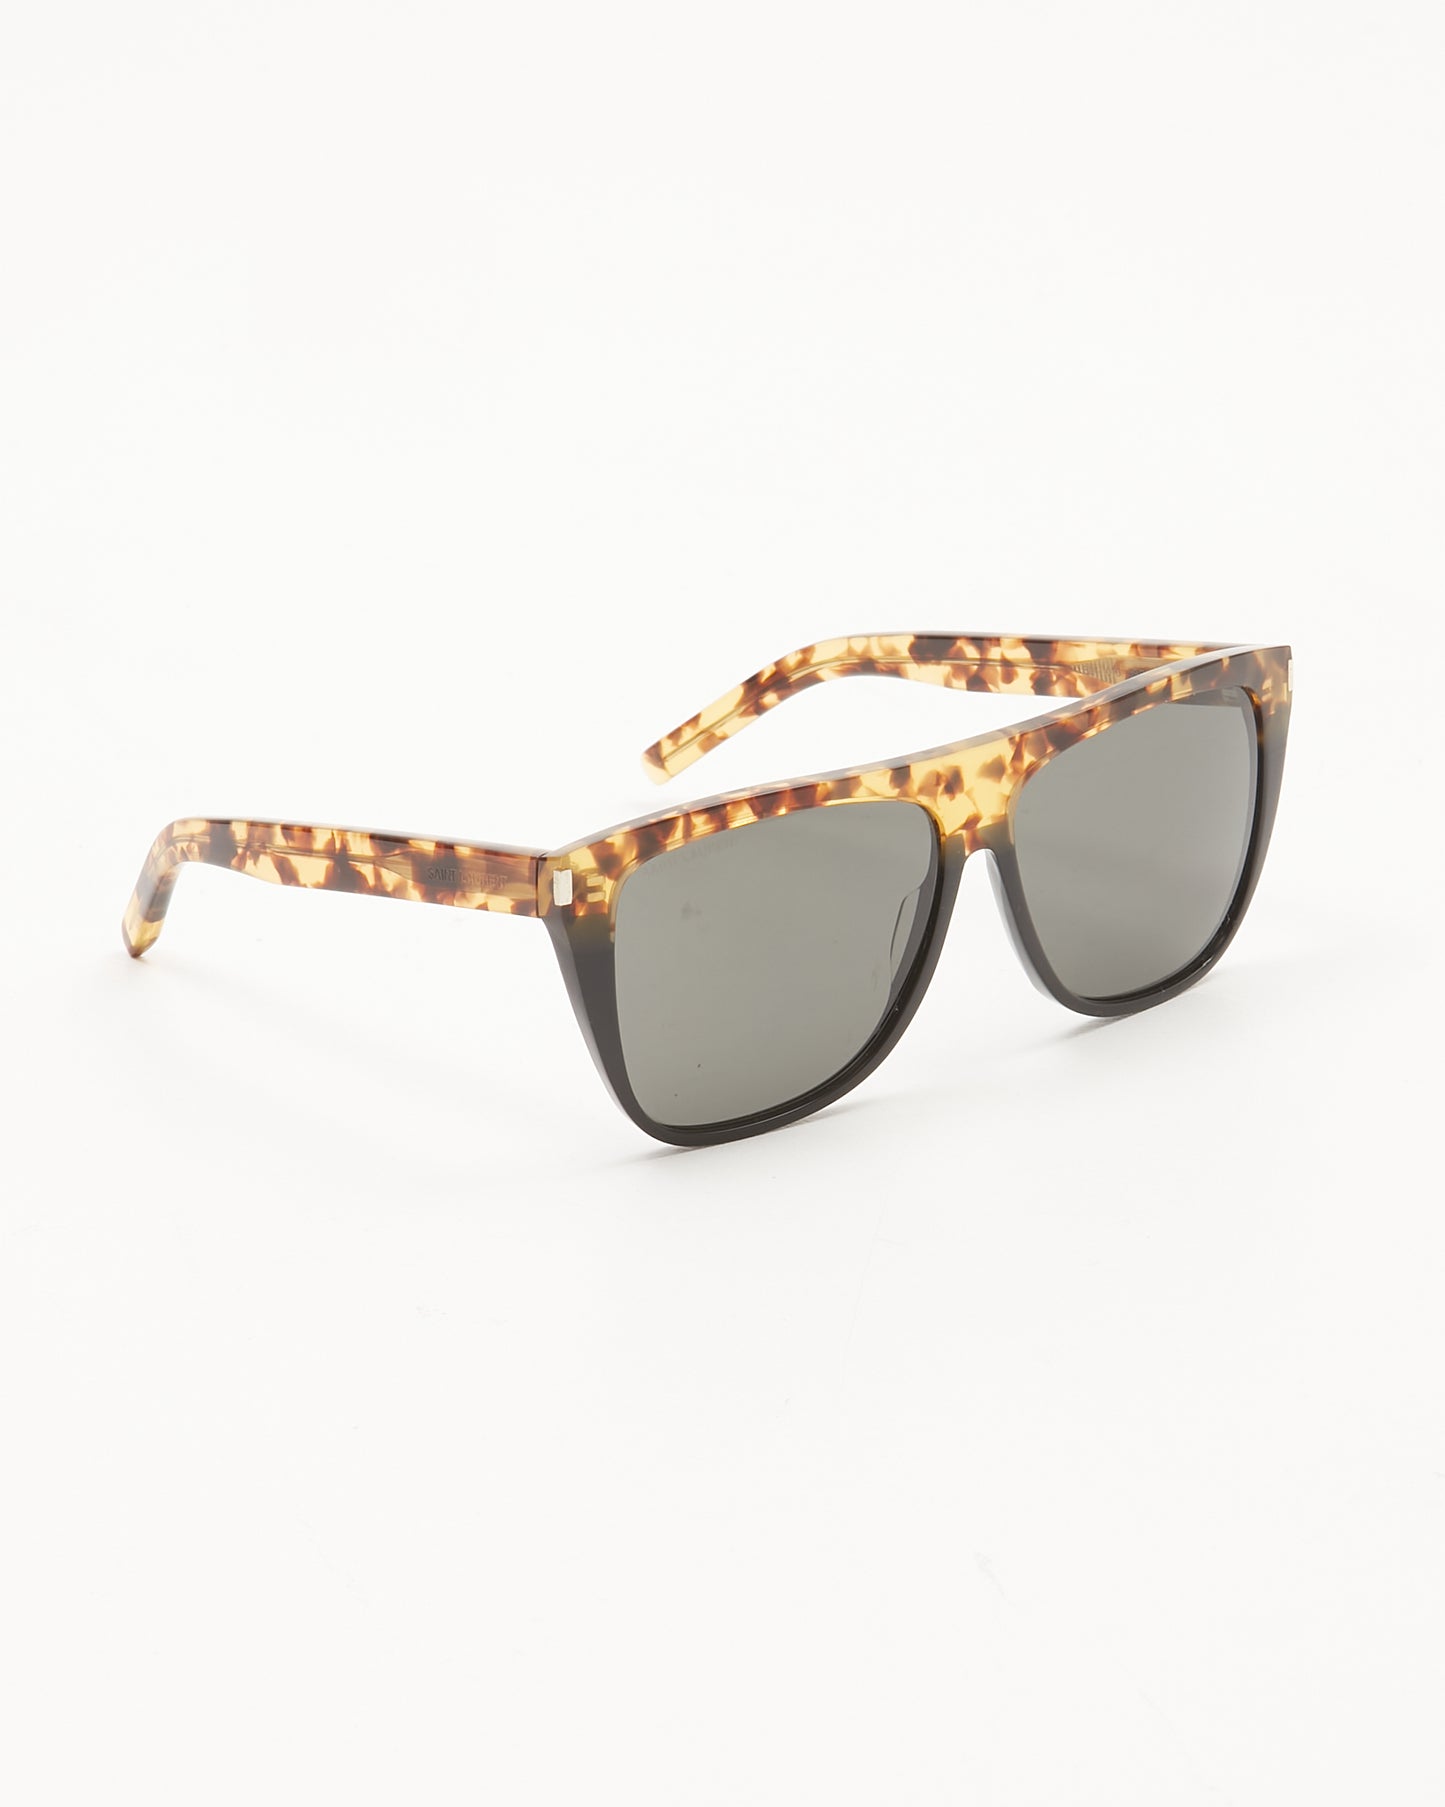 Saint Laurent Light Tortoise/Black SL1 010 Shield Sunglasses